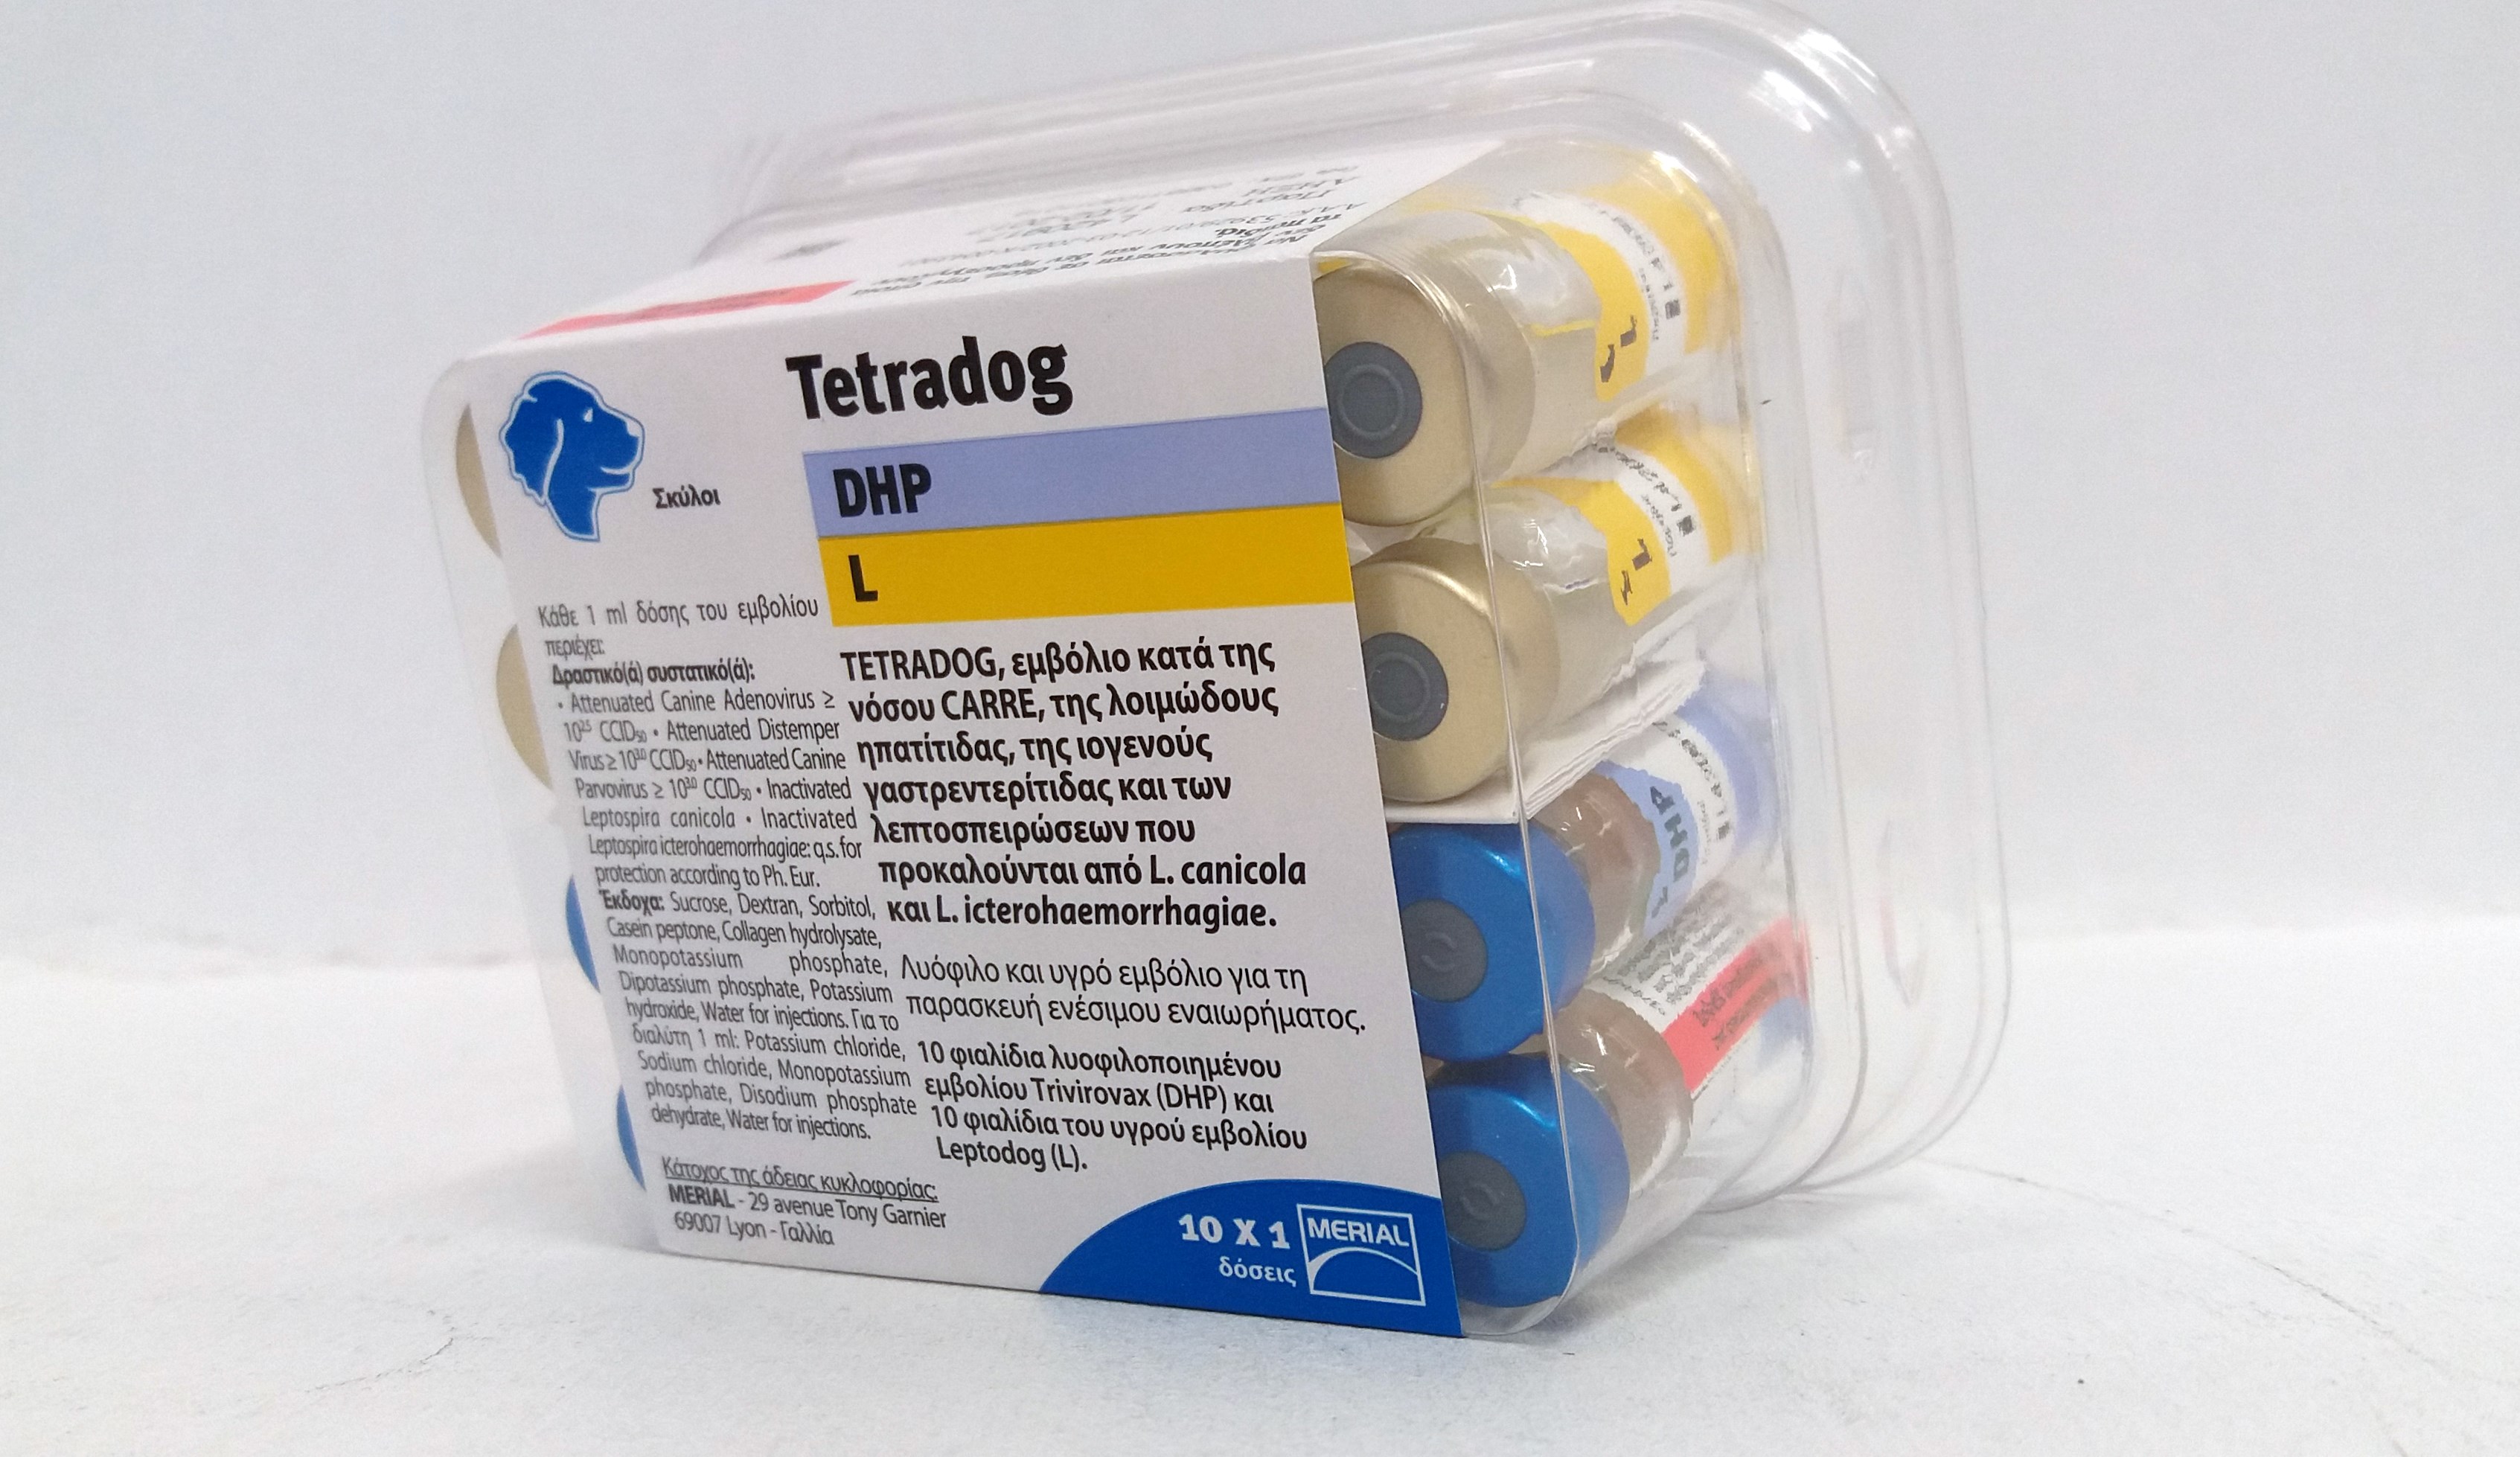 Tetradog, 1 DS